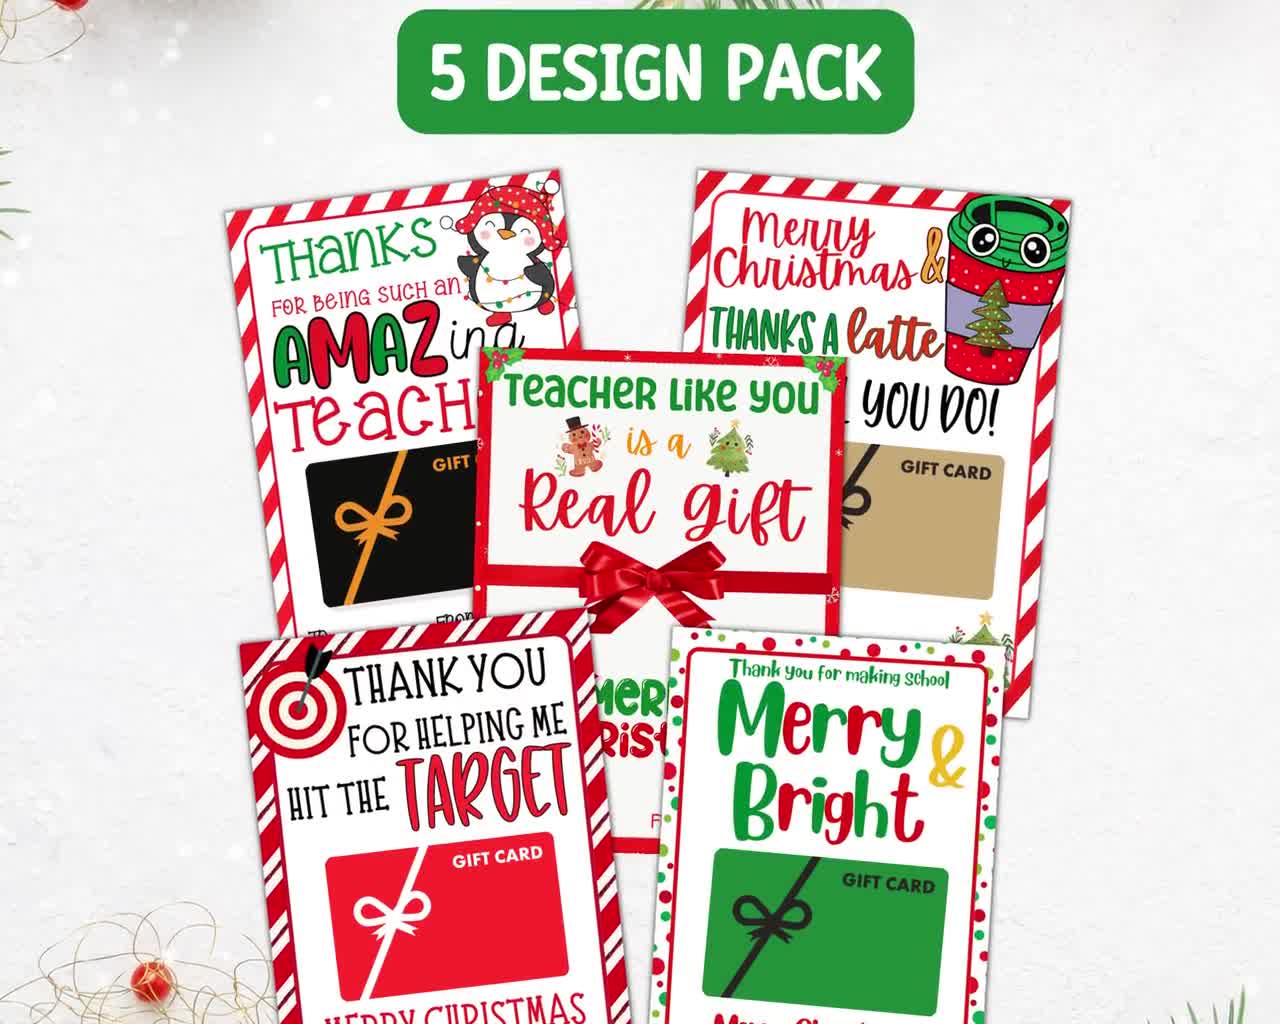   Gift Card - Print - Christmas Goodies: Gift Cards